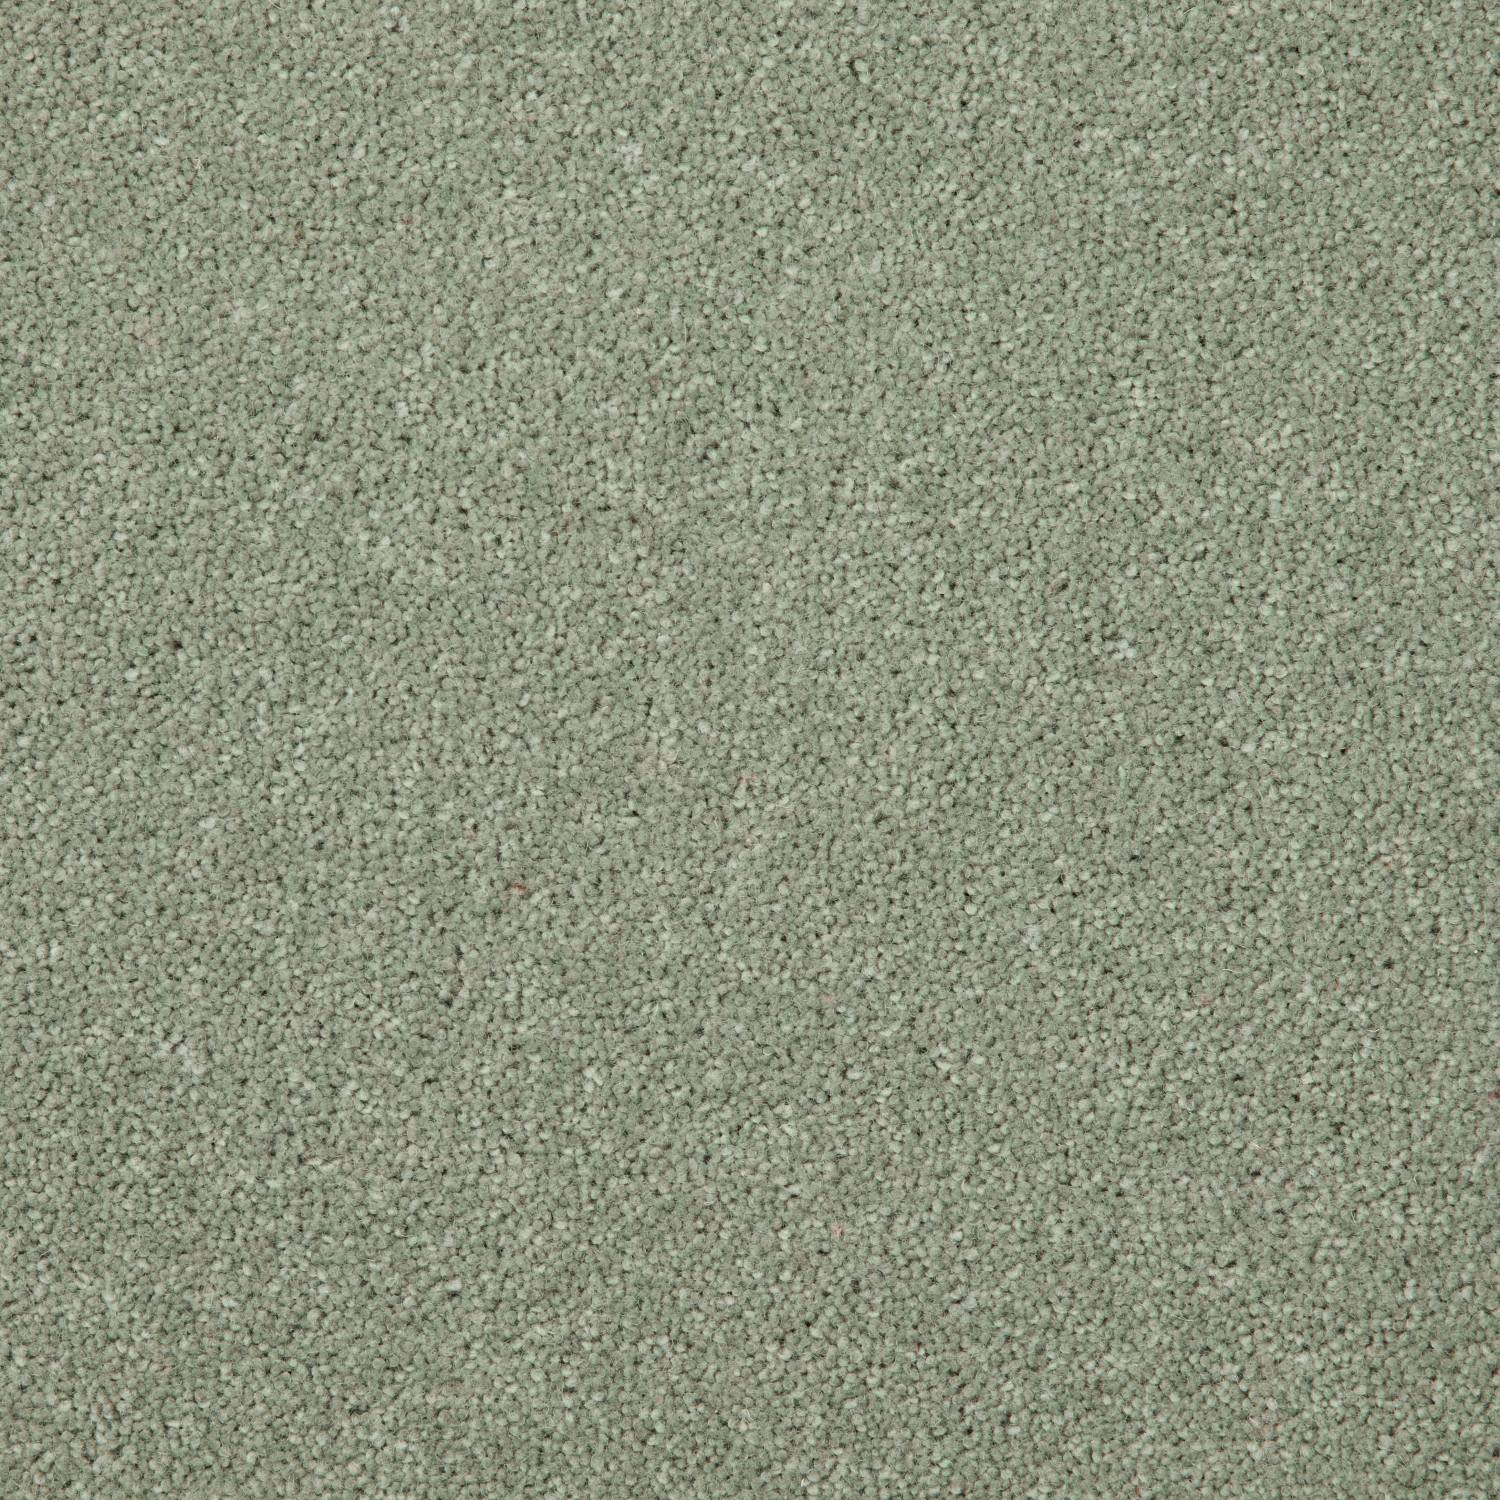 Perendale Supreme Wool Twist Carpet - Seagrass 